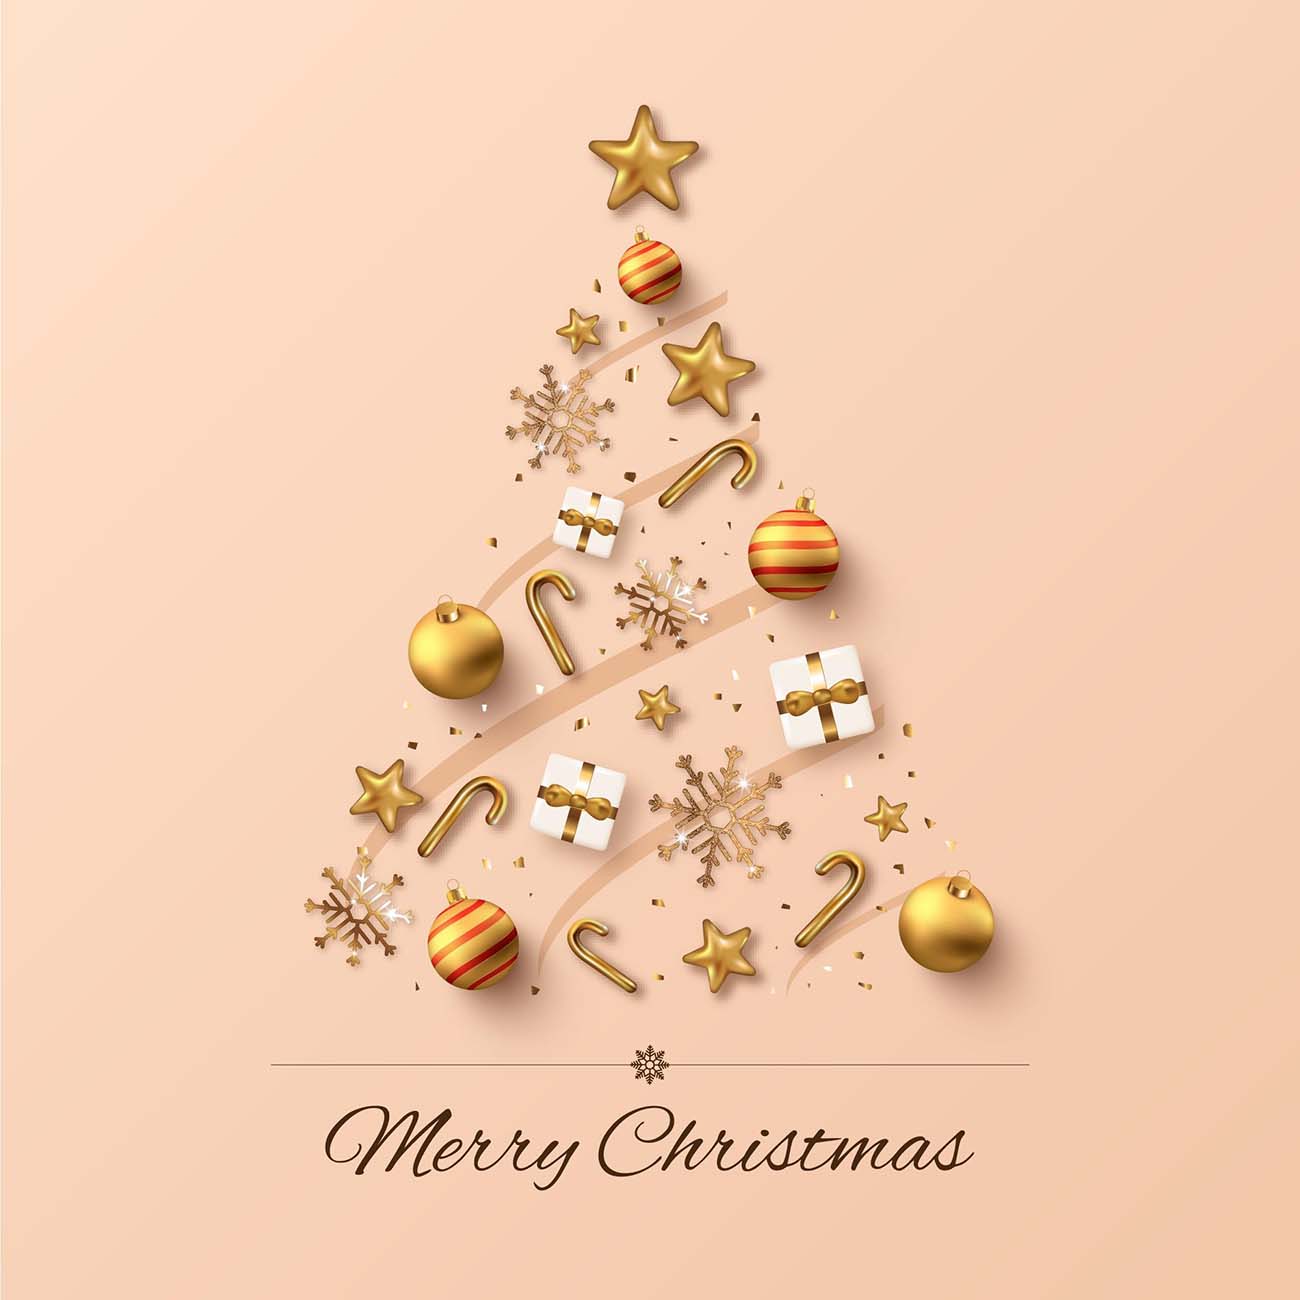   圣诞树做成了逼真的金色装饰 christmas-tree-made-realistic-golden-decoration